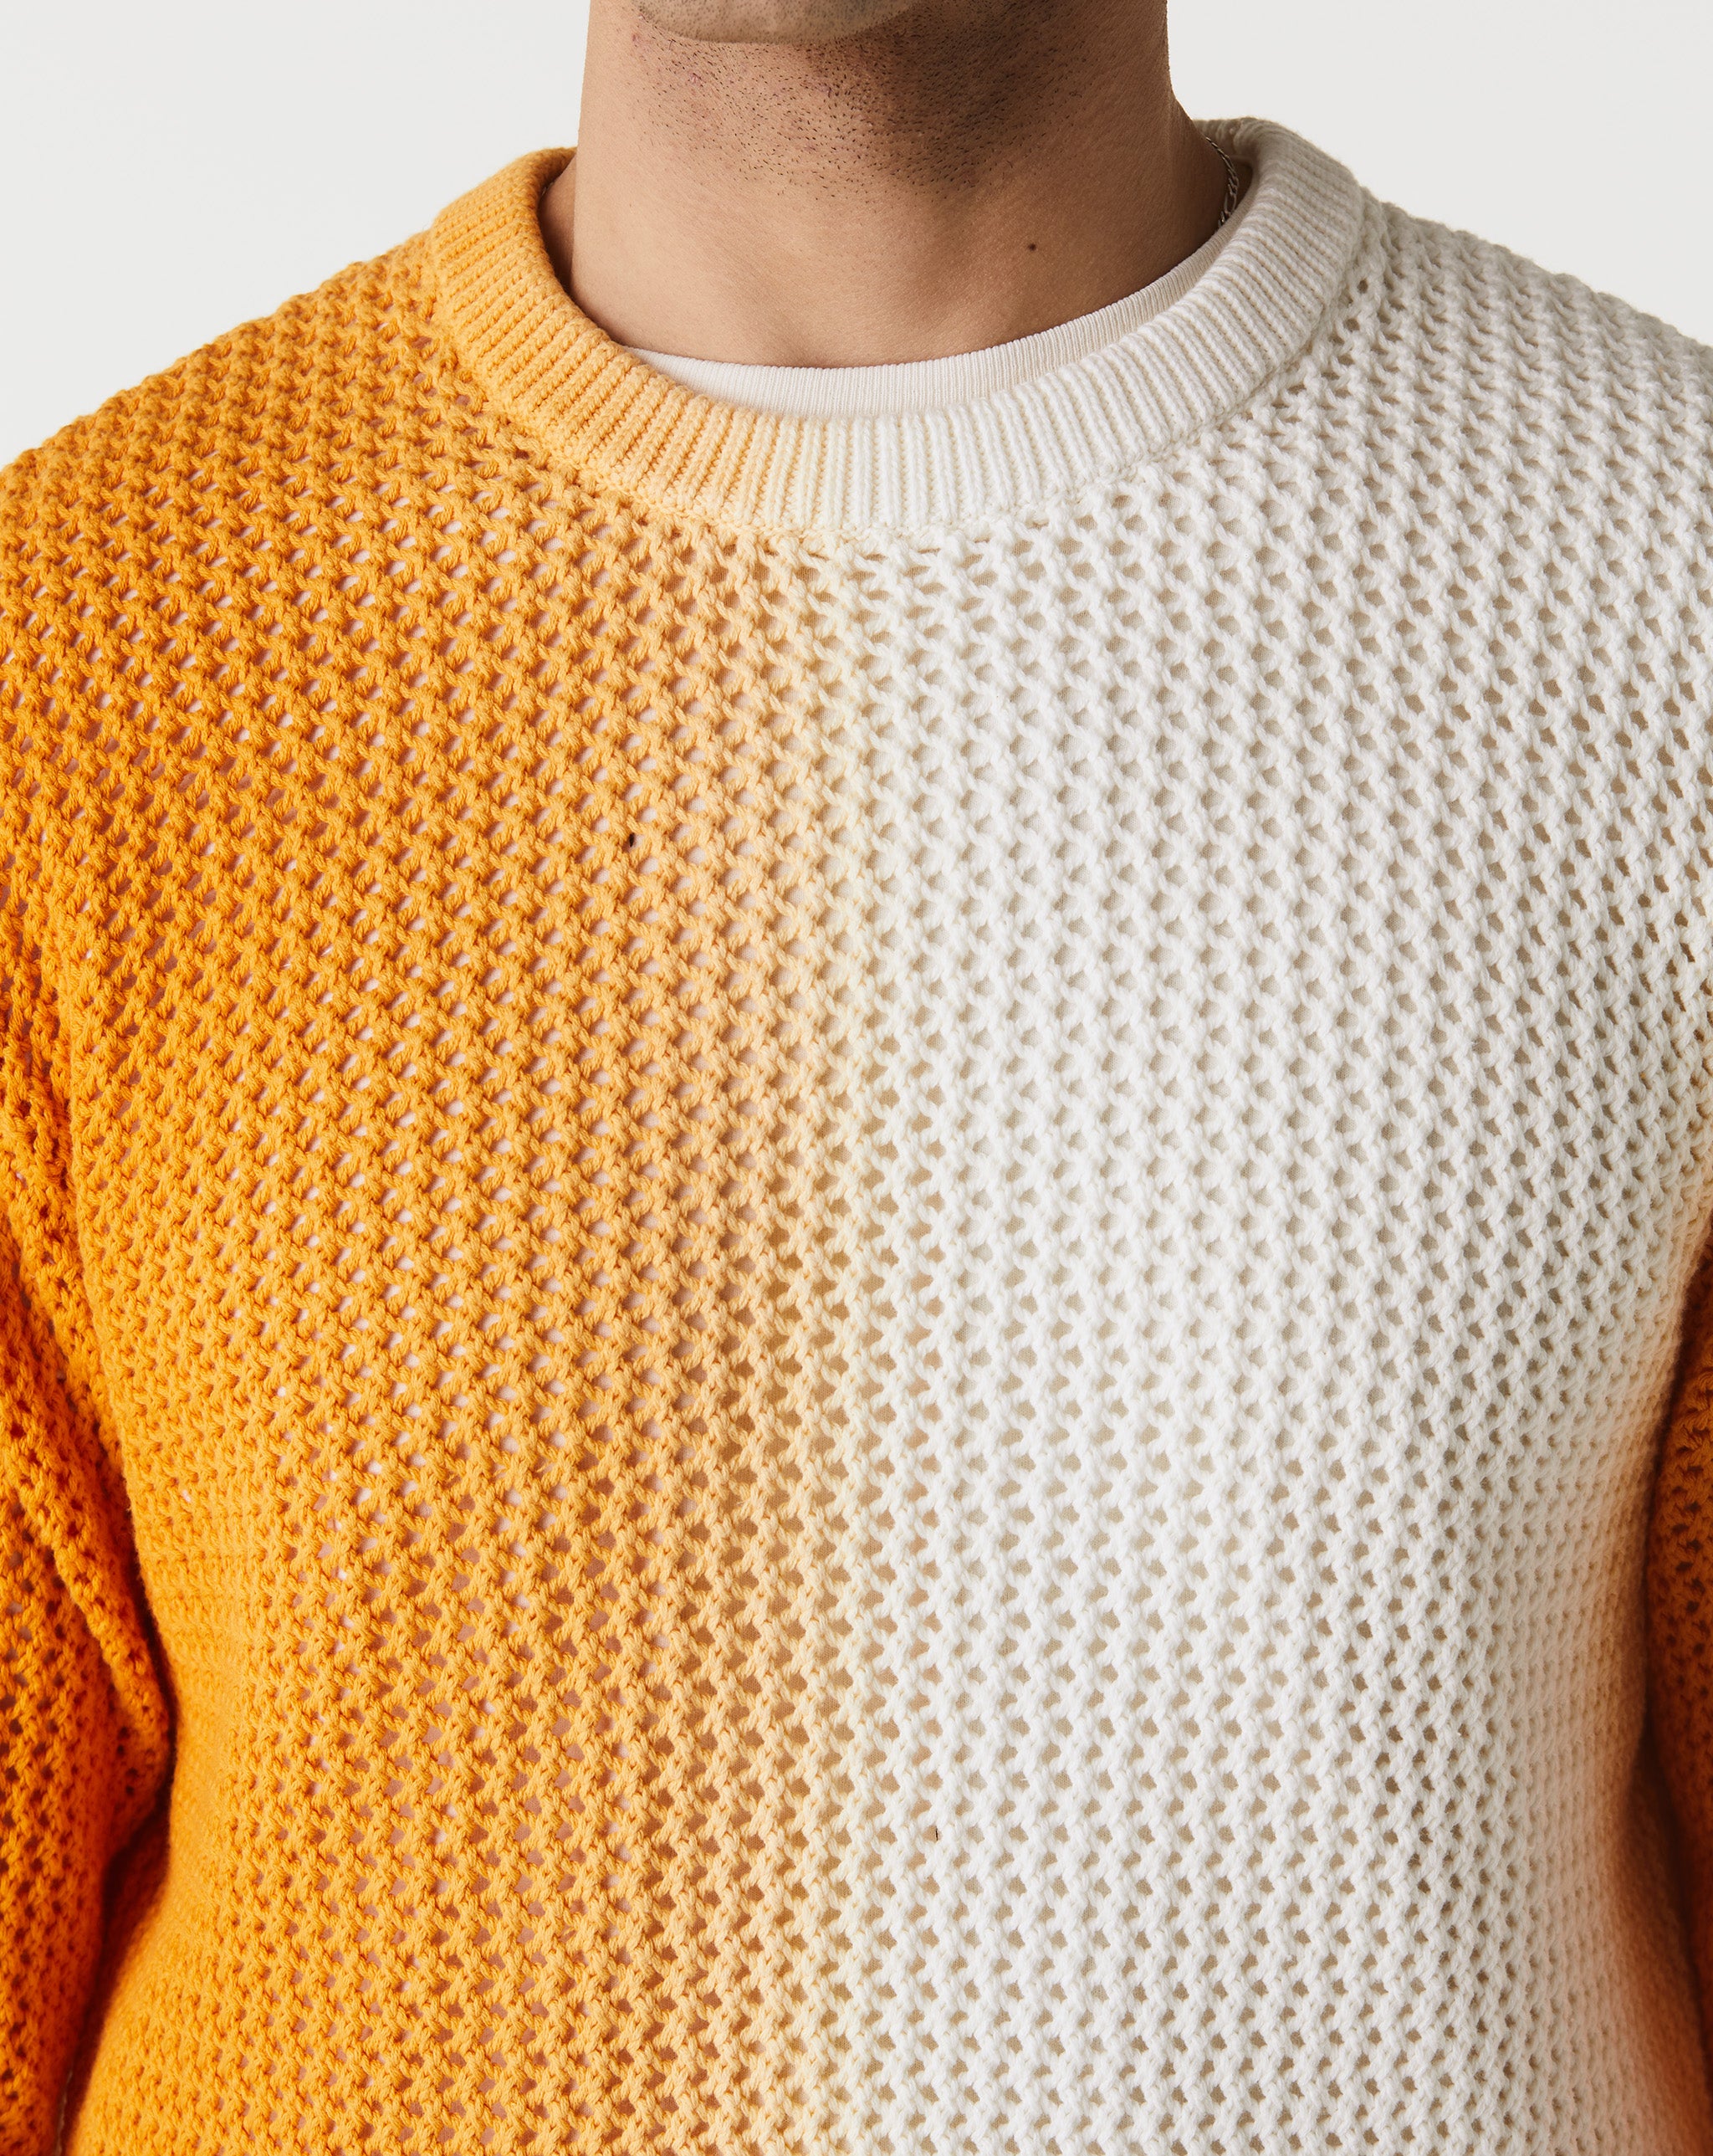 Stüssy Dyed Loose Guage Sweater  - XHIBITION